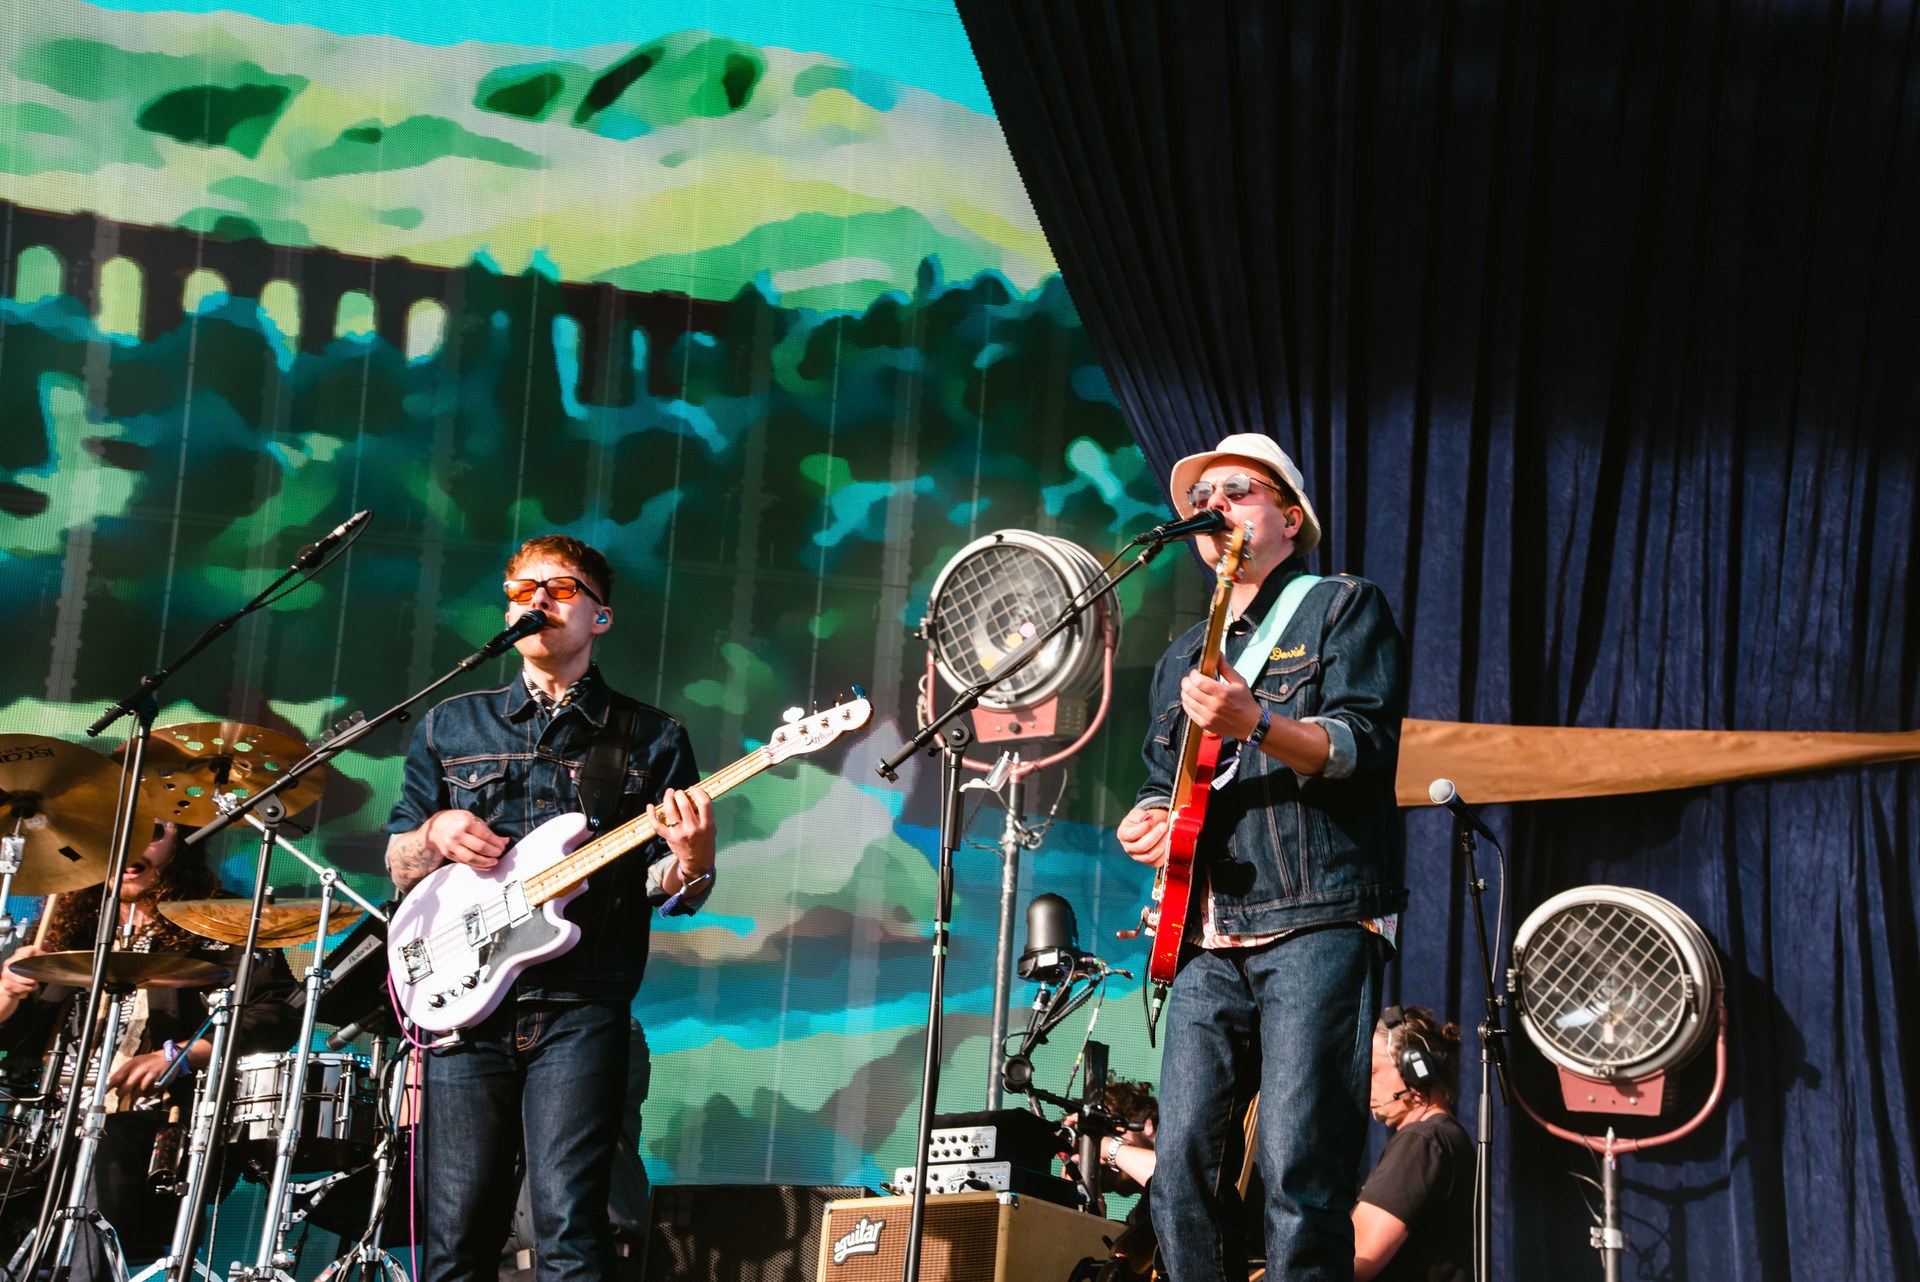 George Ezra performed on Friday's main stage. (Image: TRNSMT)